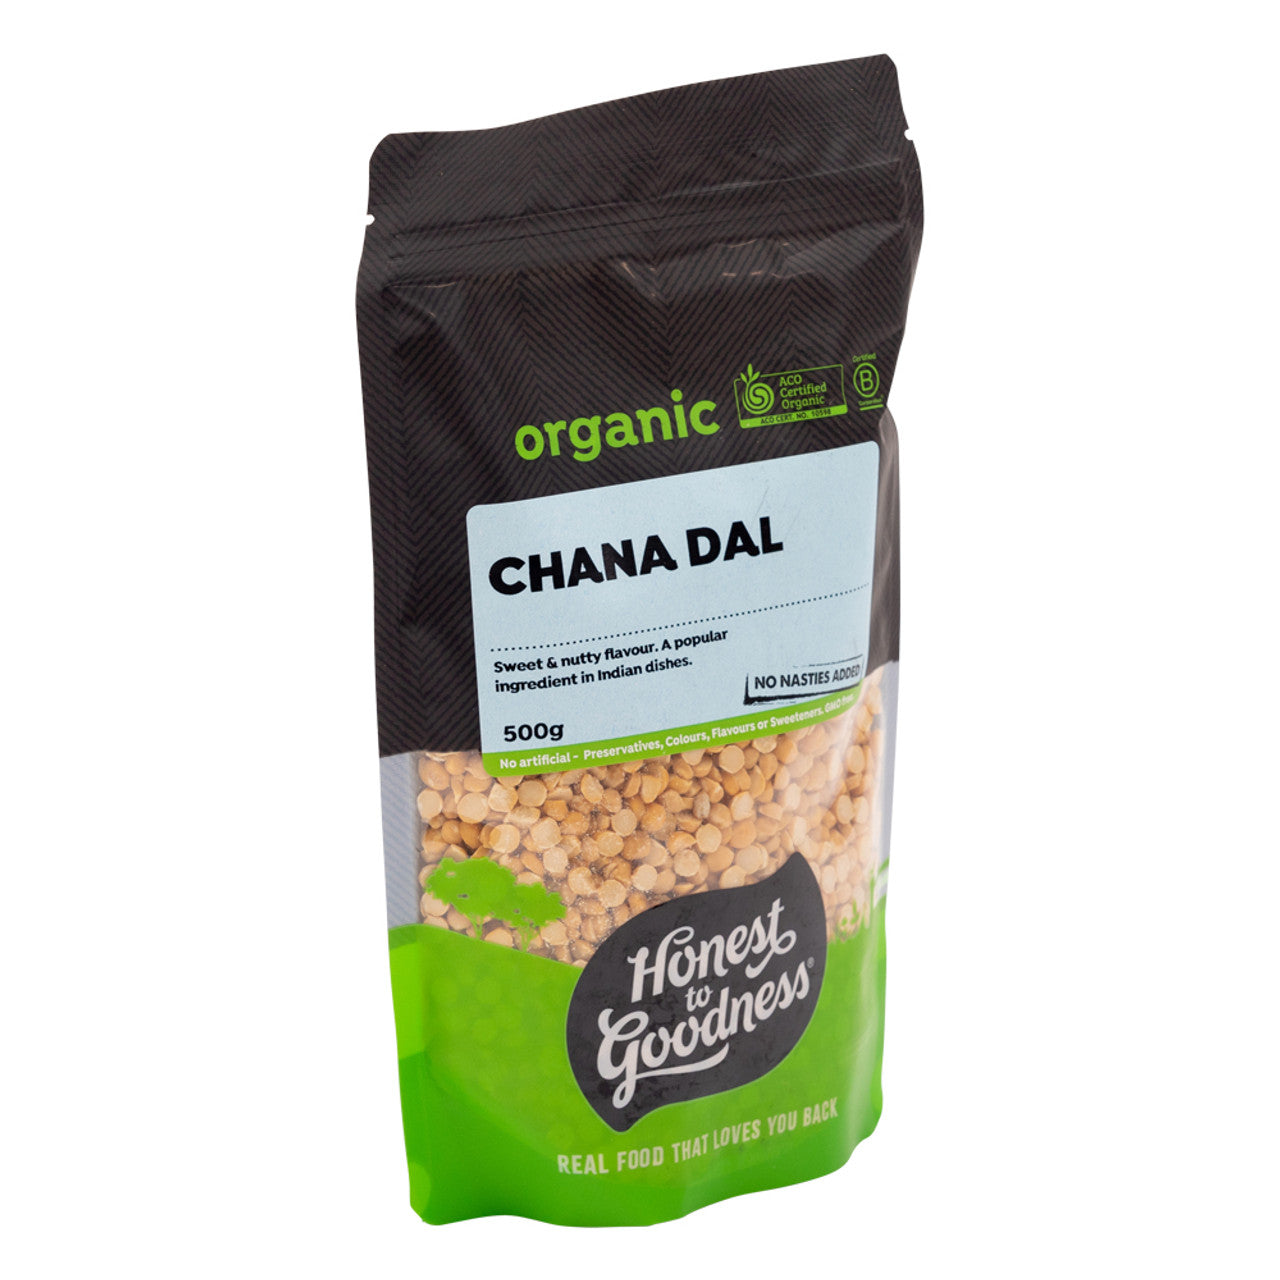 Honest To Goodness Chana Dal 500g, Baby Split Chickpeas Australian Certified Organic